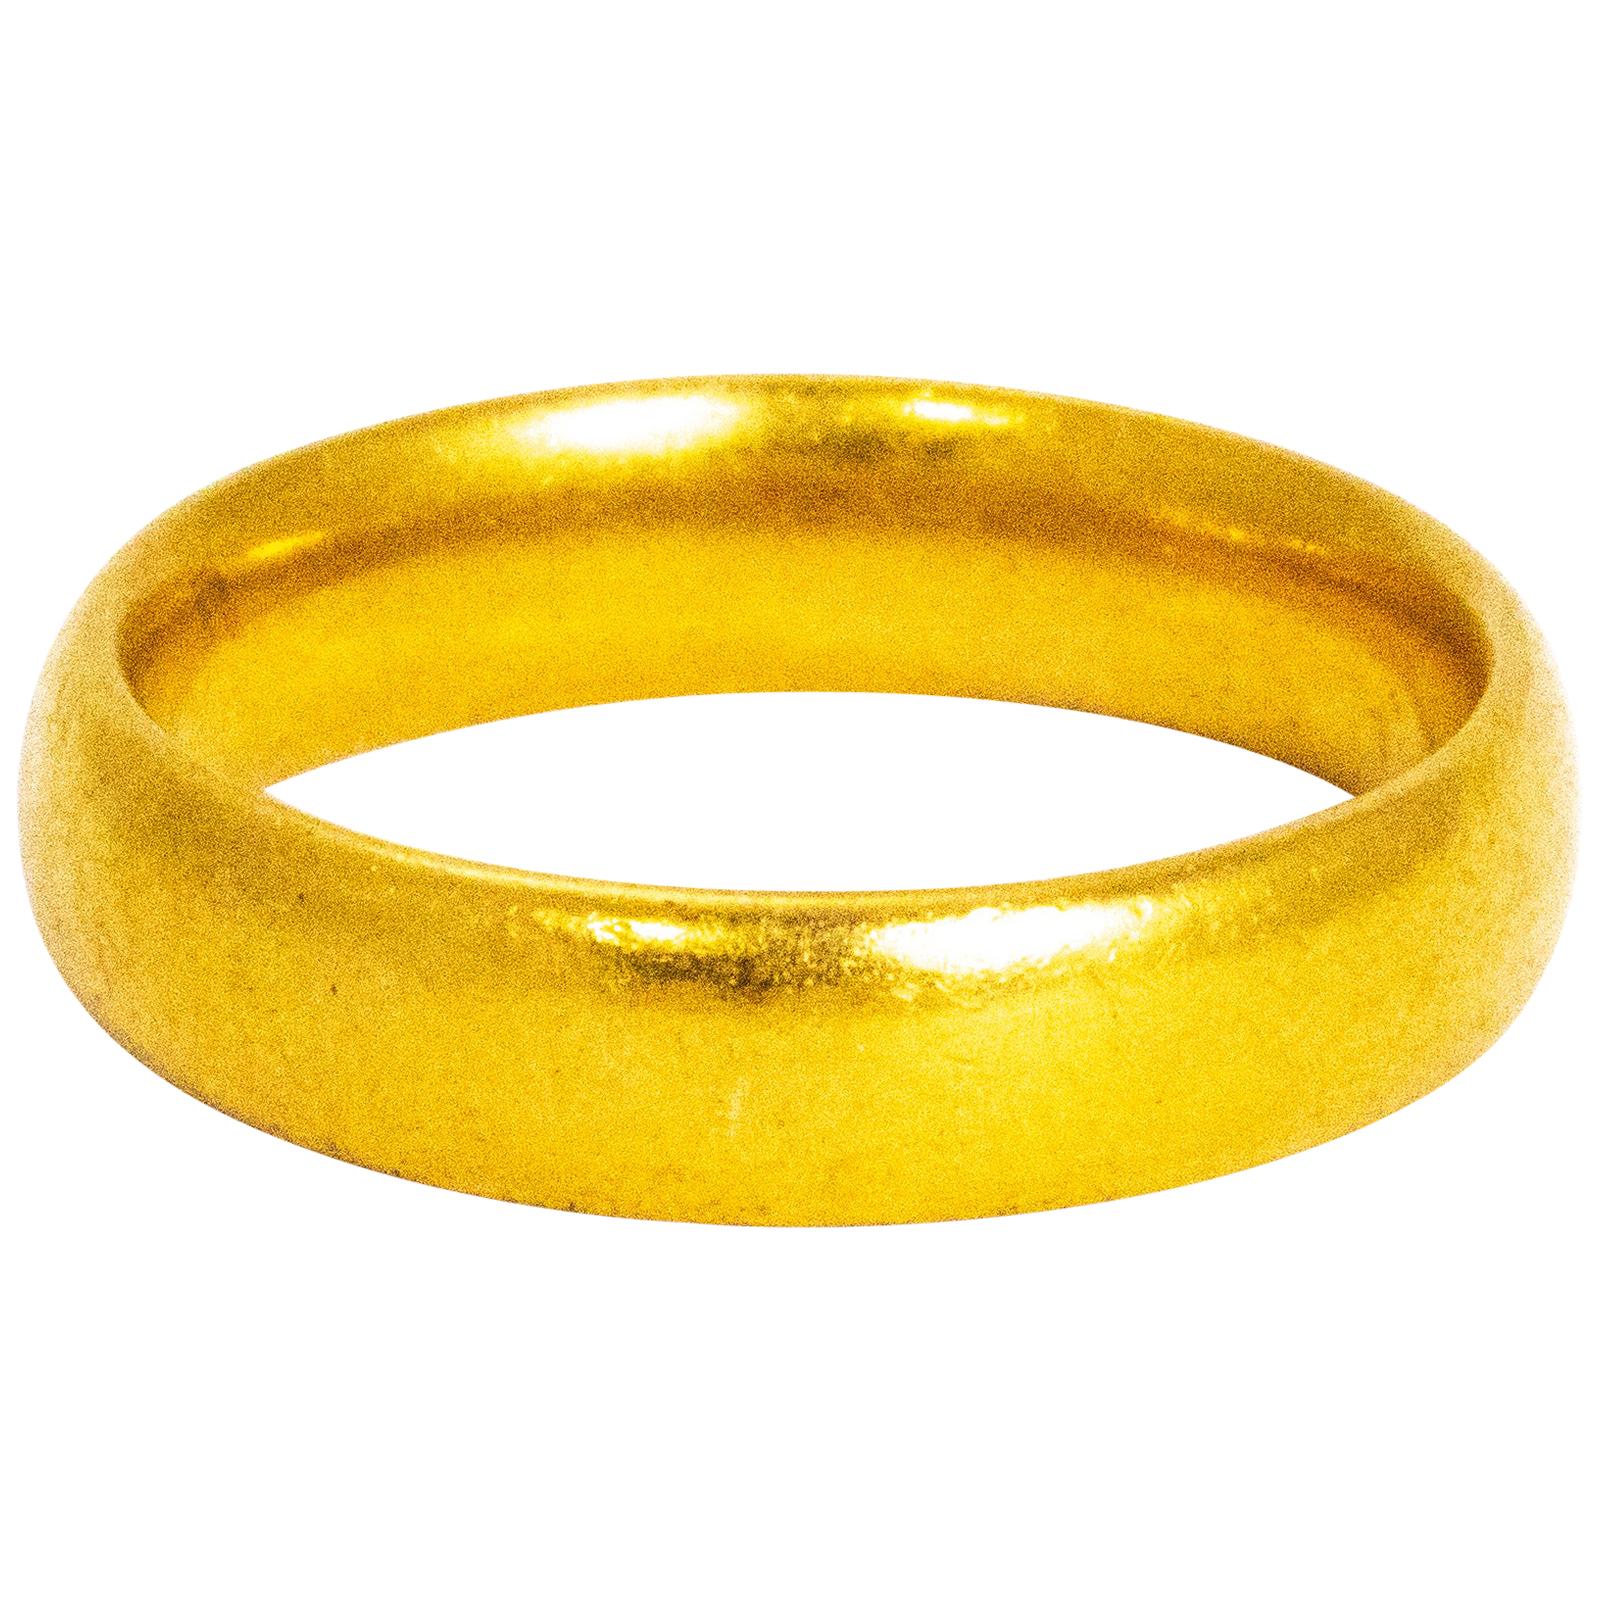 22K Gold Wedding Band Ring For Men - 235-GR7450 in 1.950 Grams